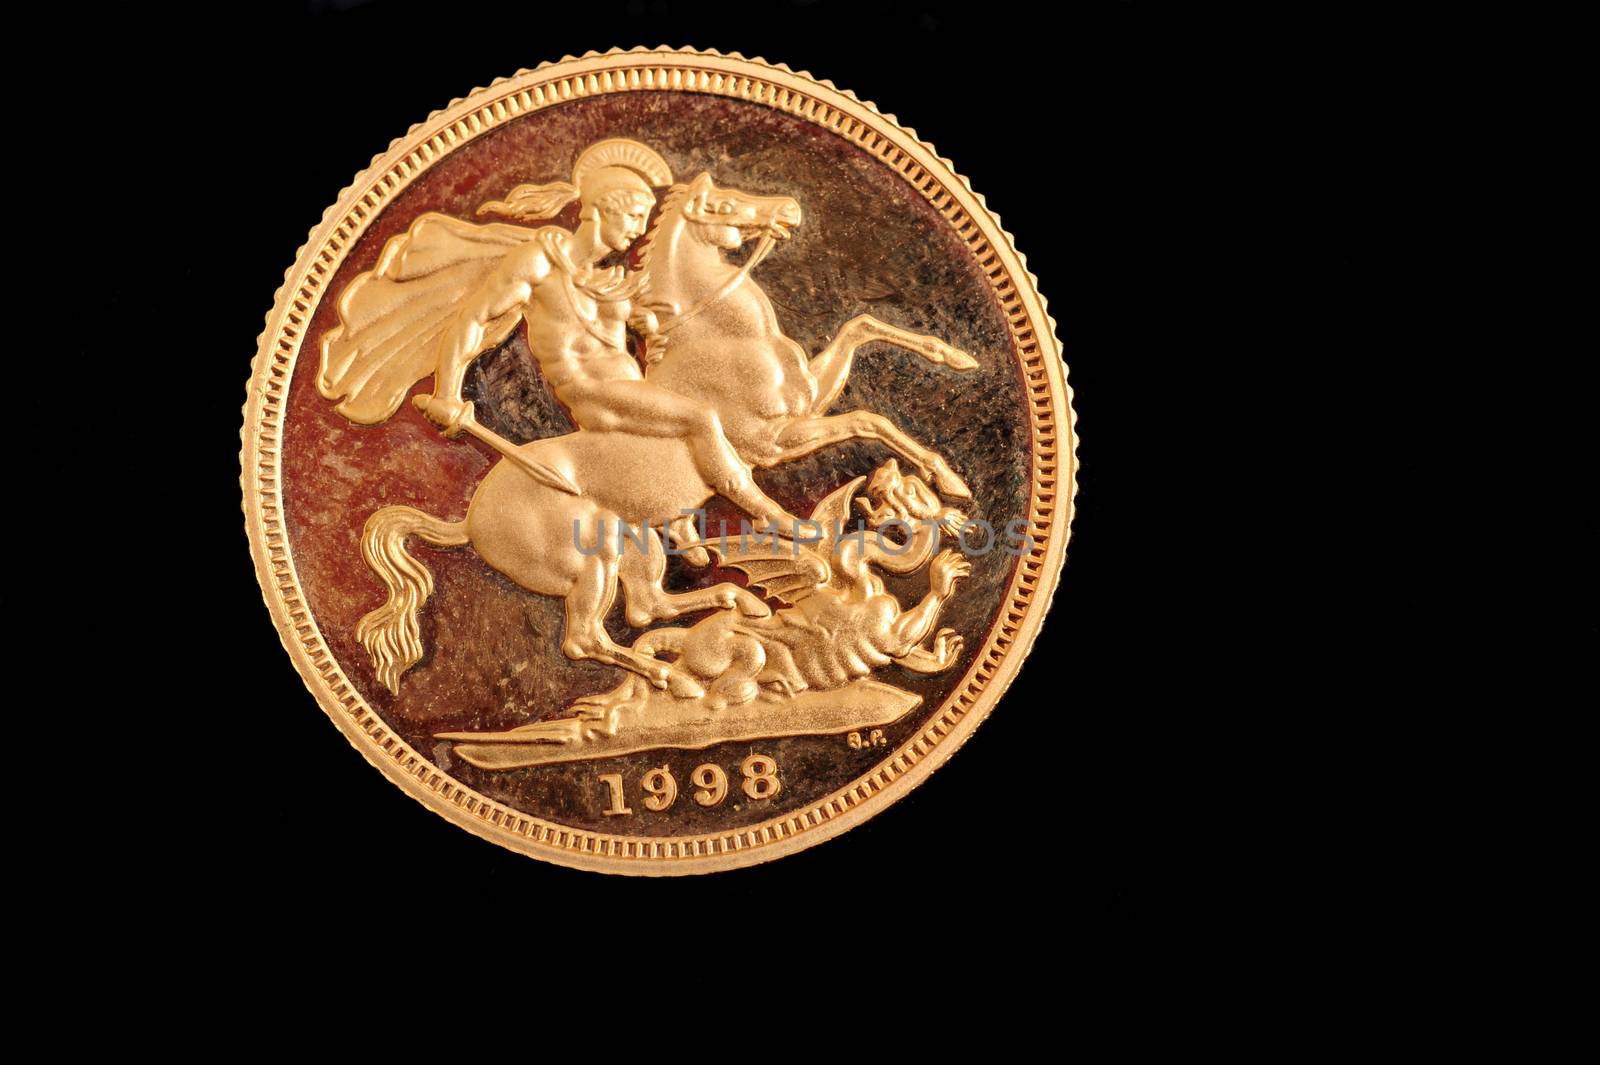 Gold Sovereign 22 Carat British Coin